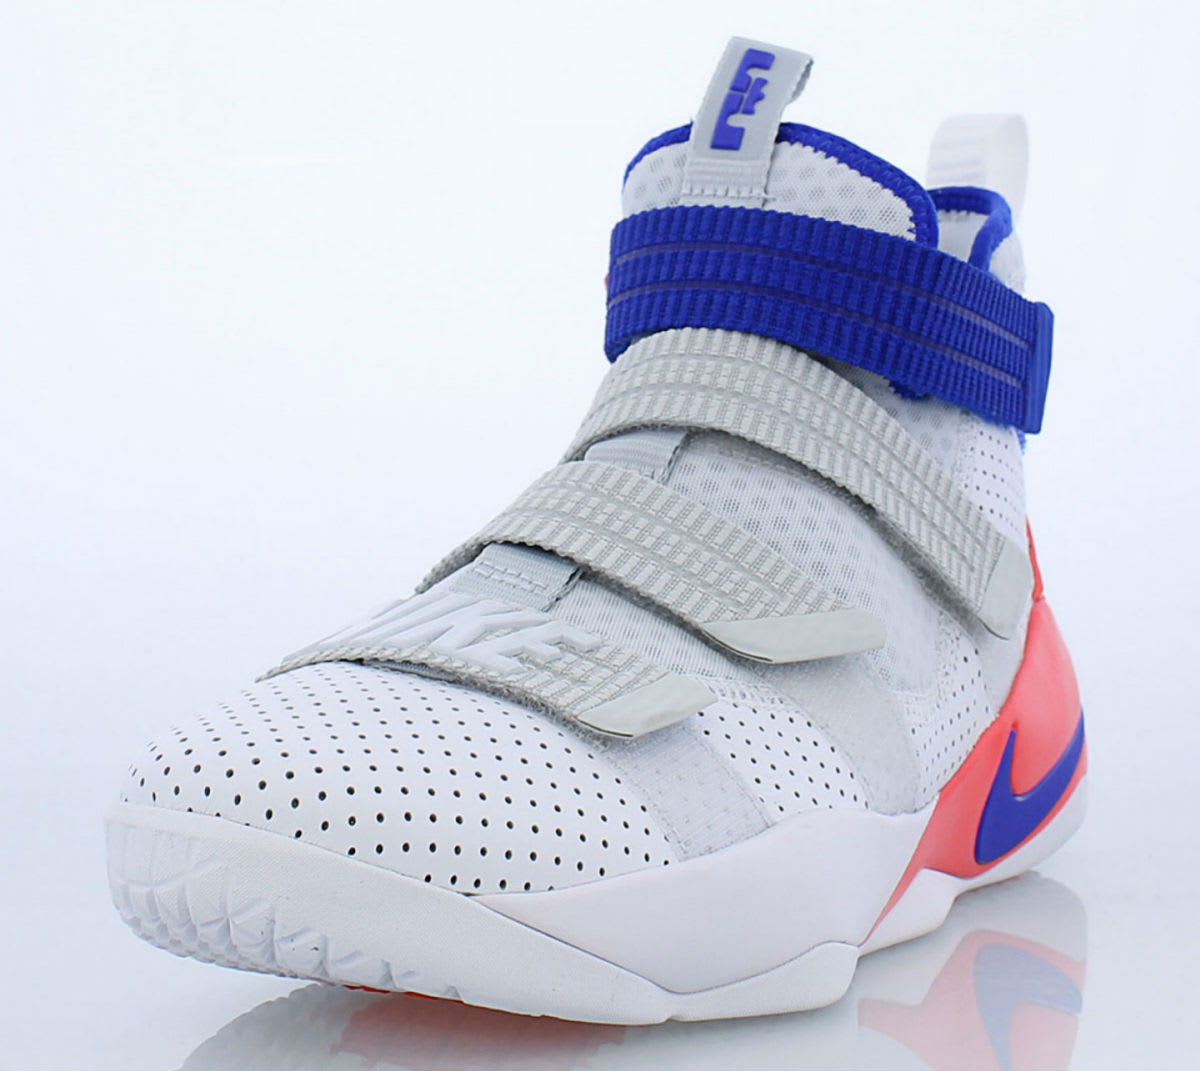 Nike LeBron Soldier 11 Ultramarine Release Date 897646-101